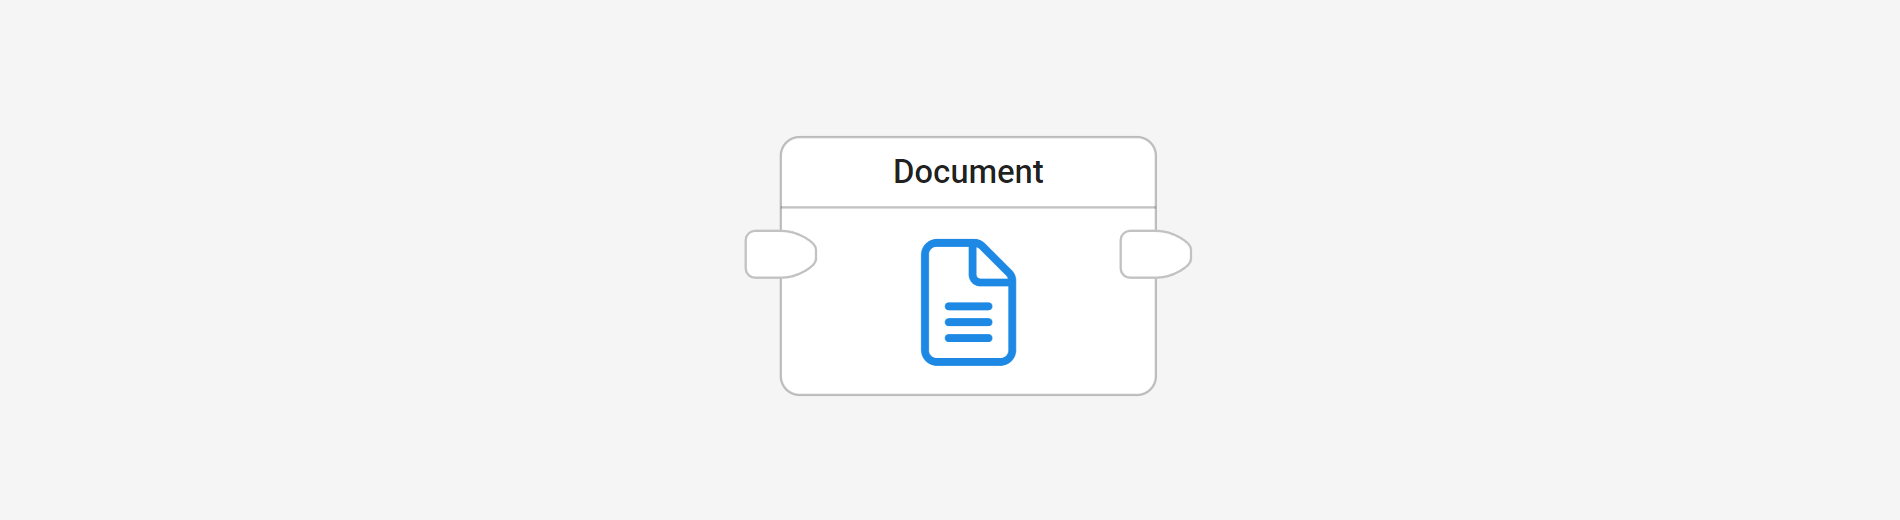 Create Document block in flow editor